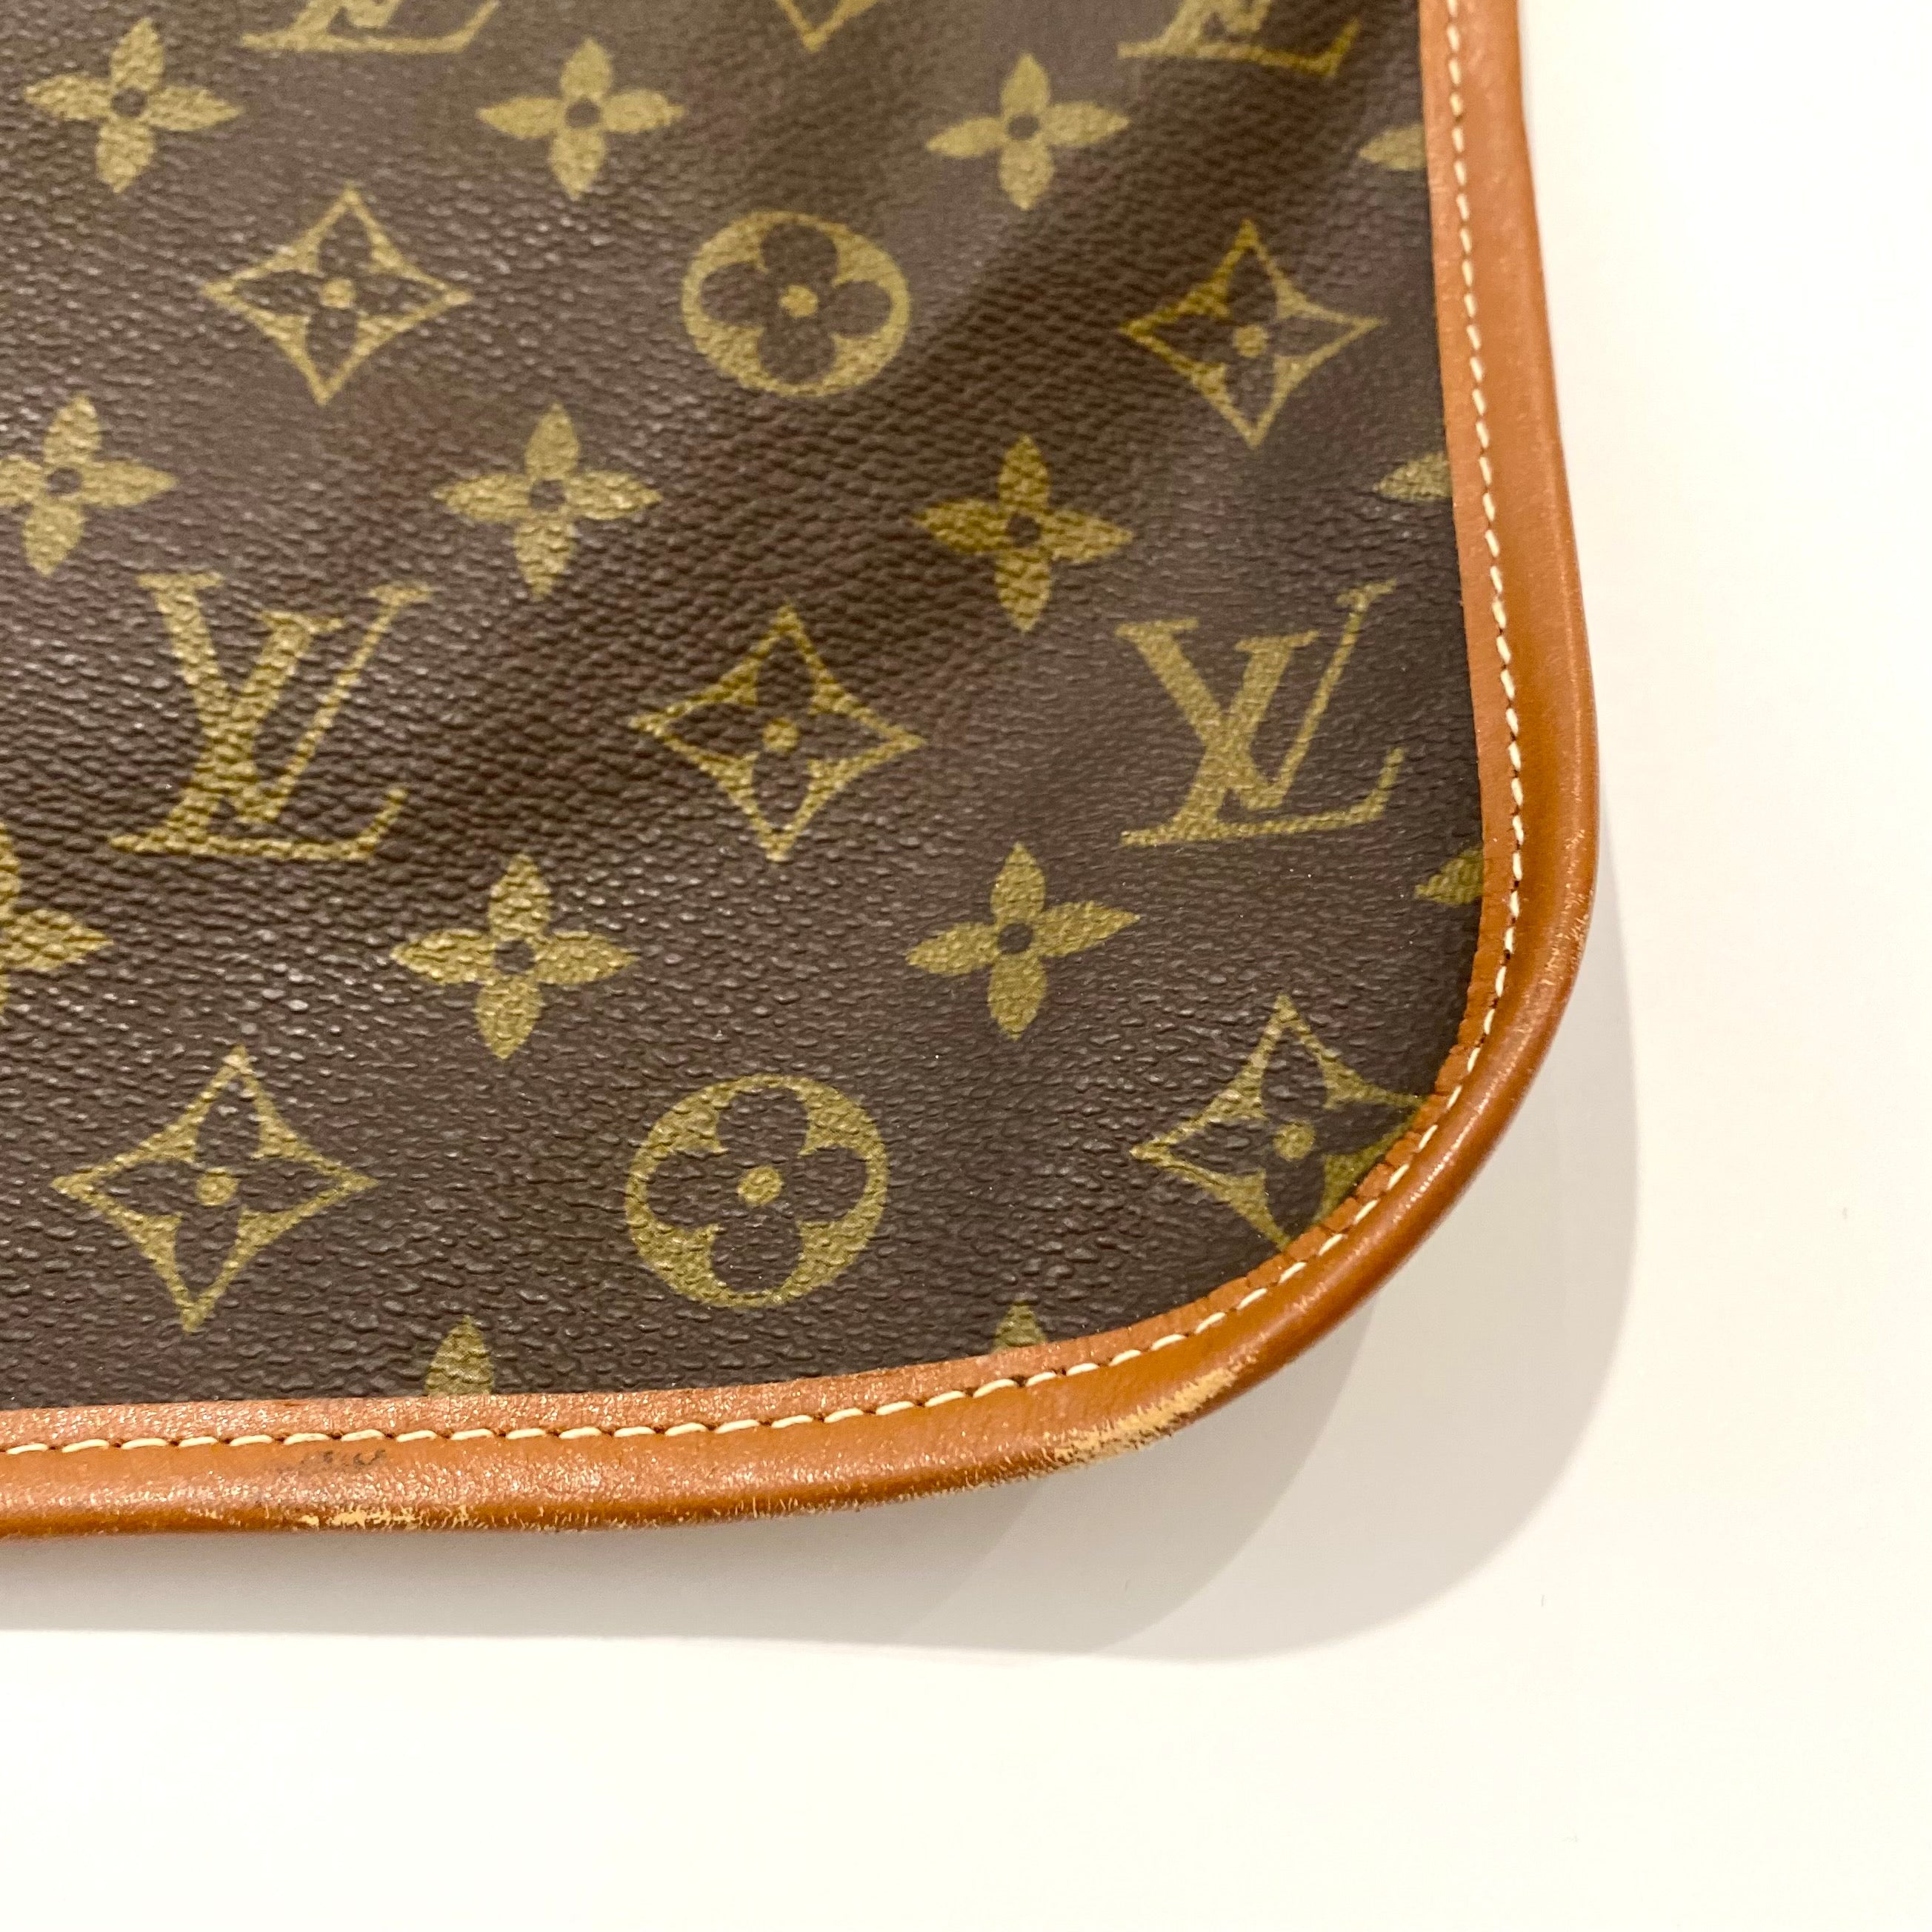 Original Vintage Louis Vuitton Lv Monogram Garment Bag Monogram Eff